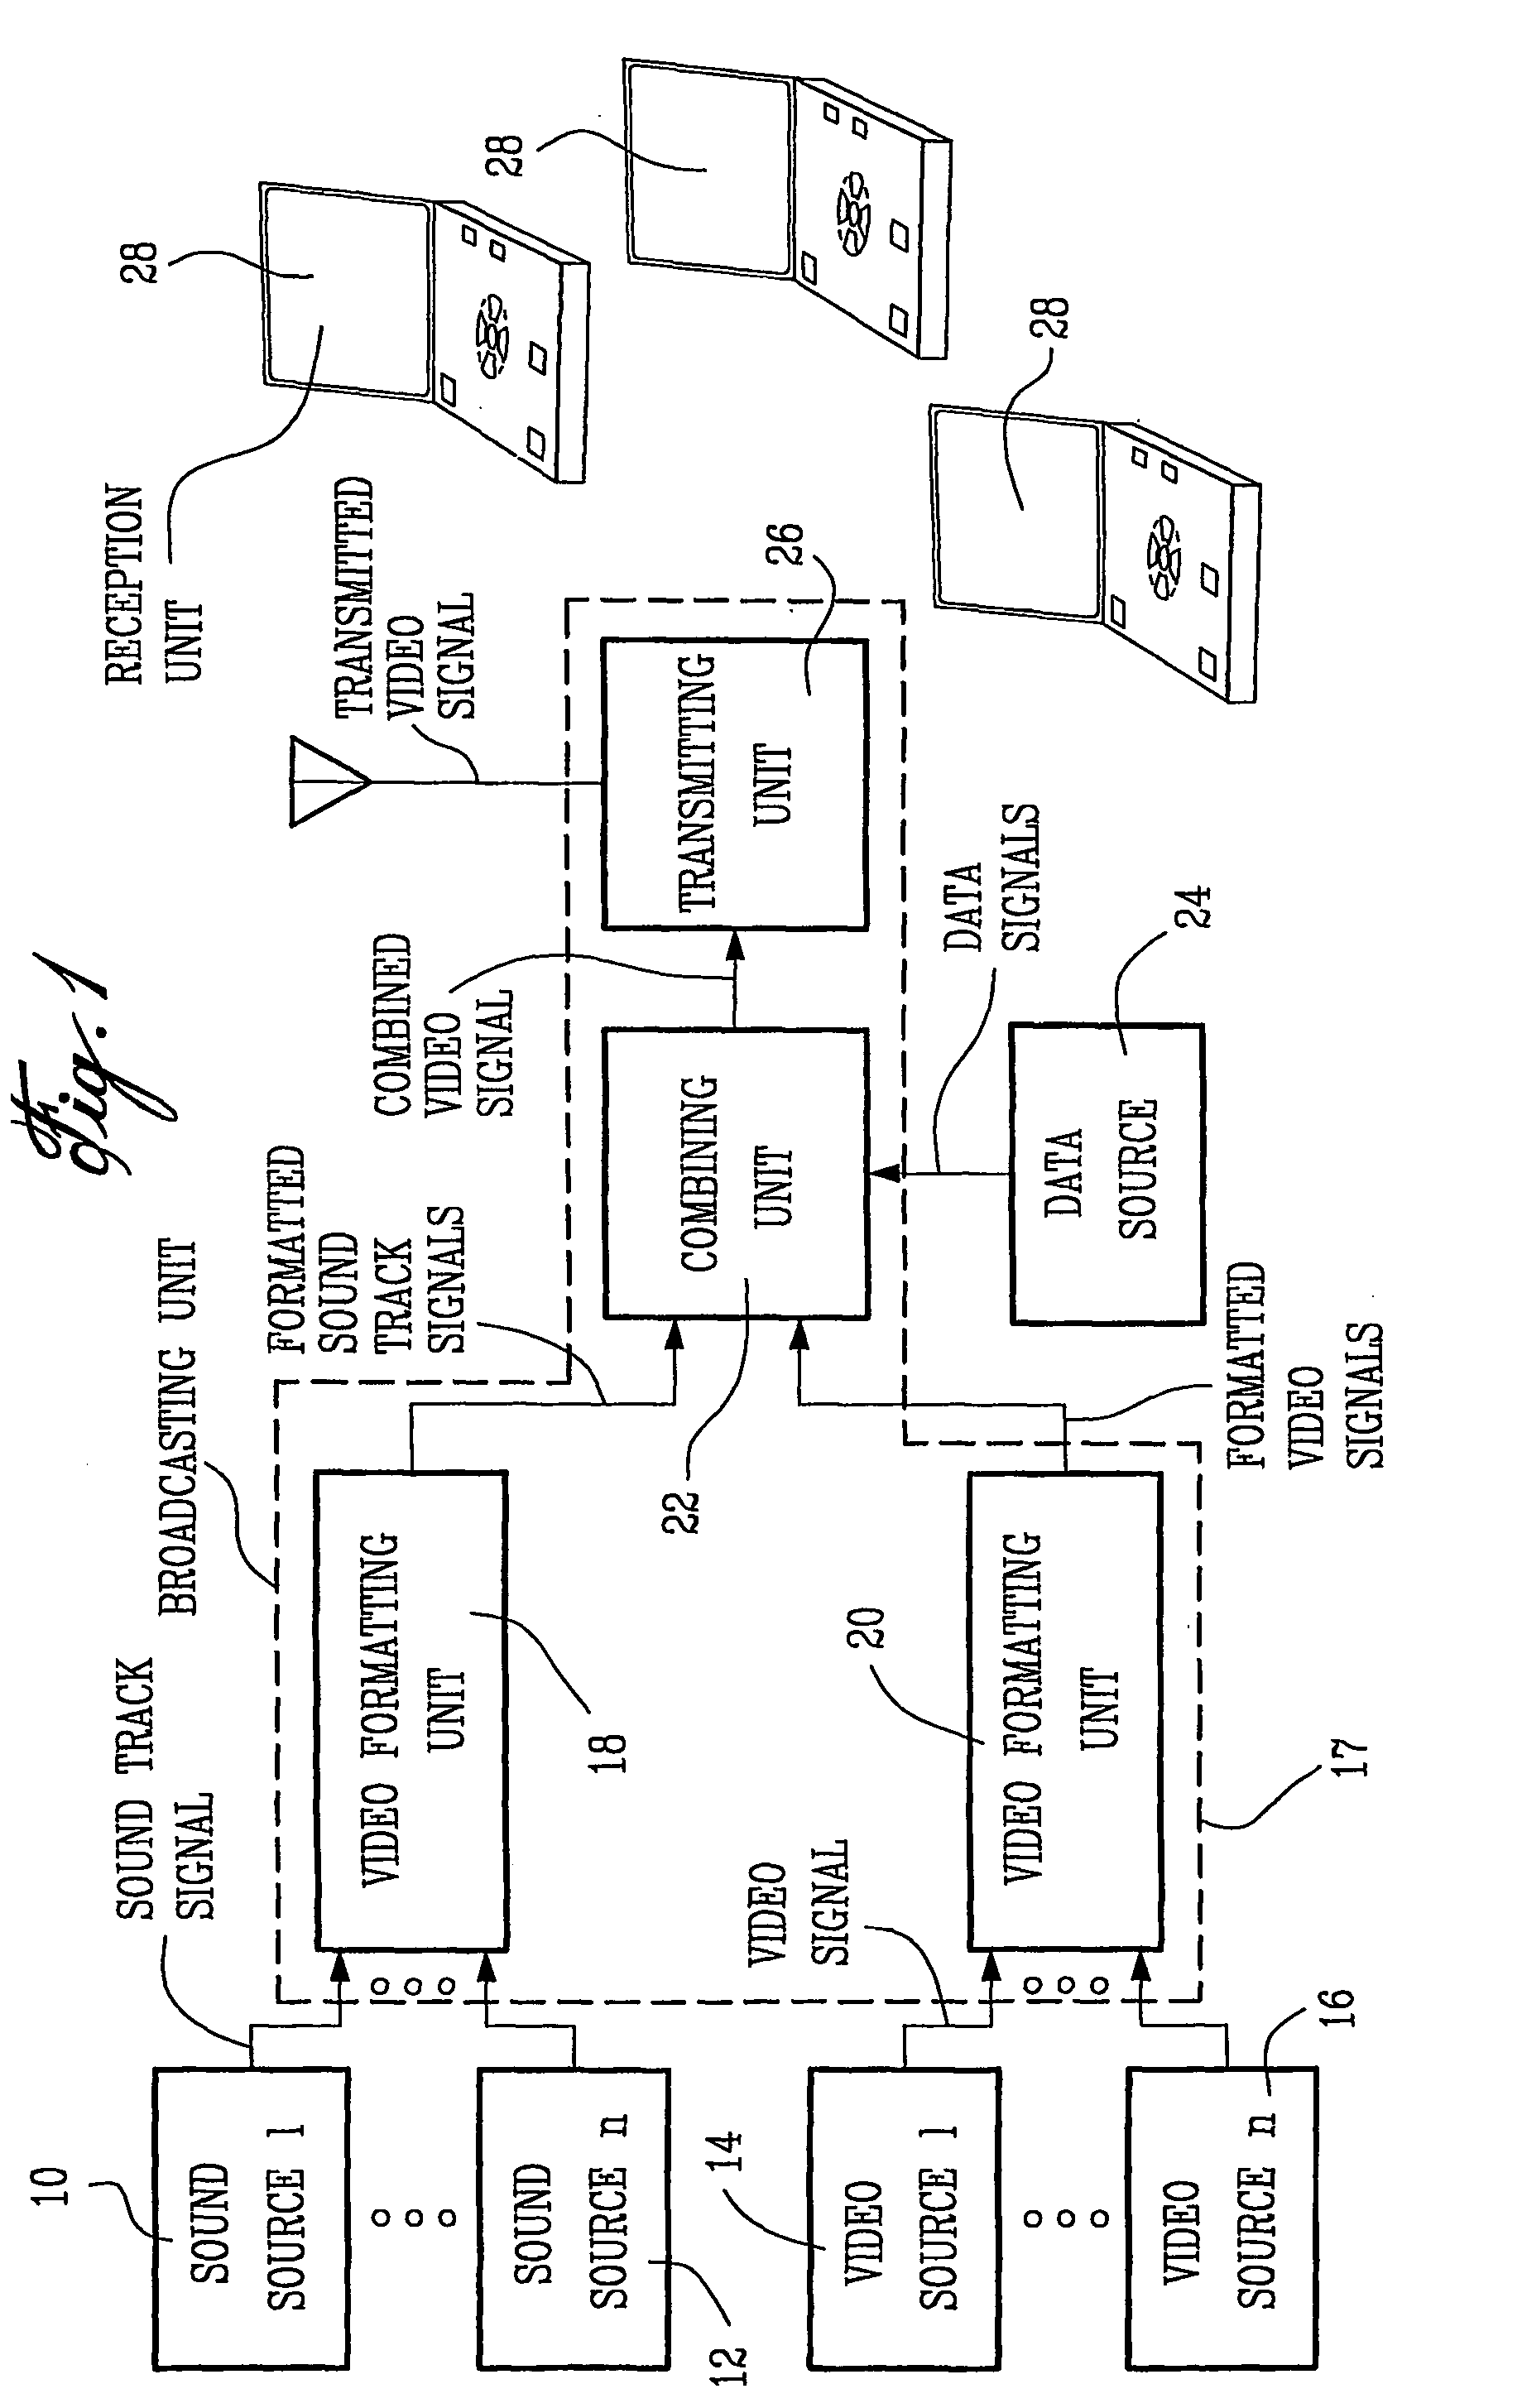 Multi-video receiving method and apparatus